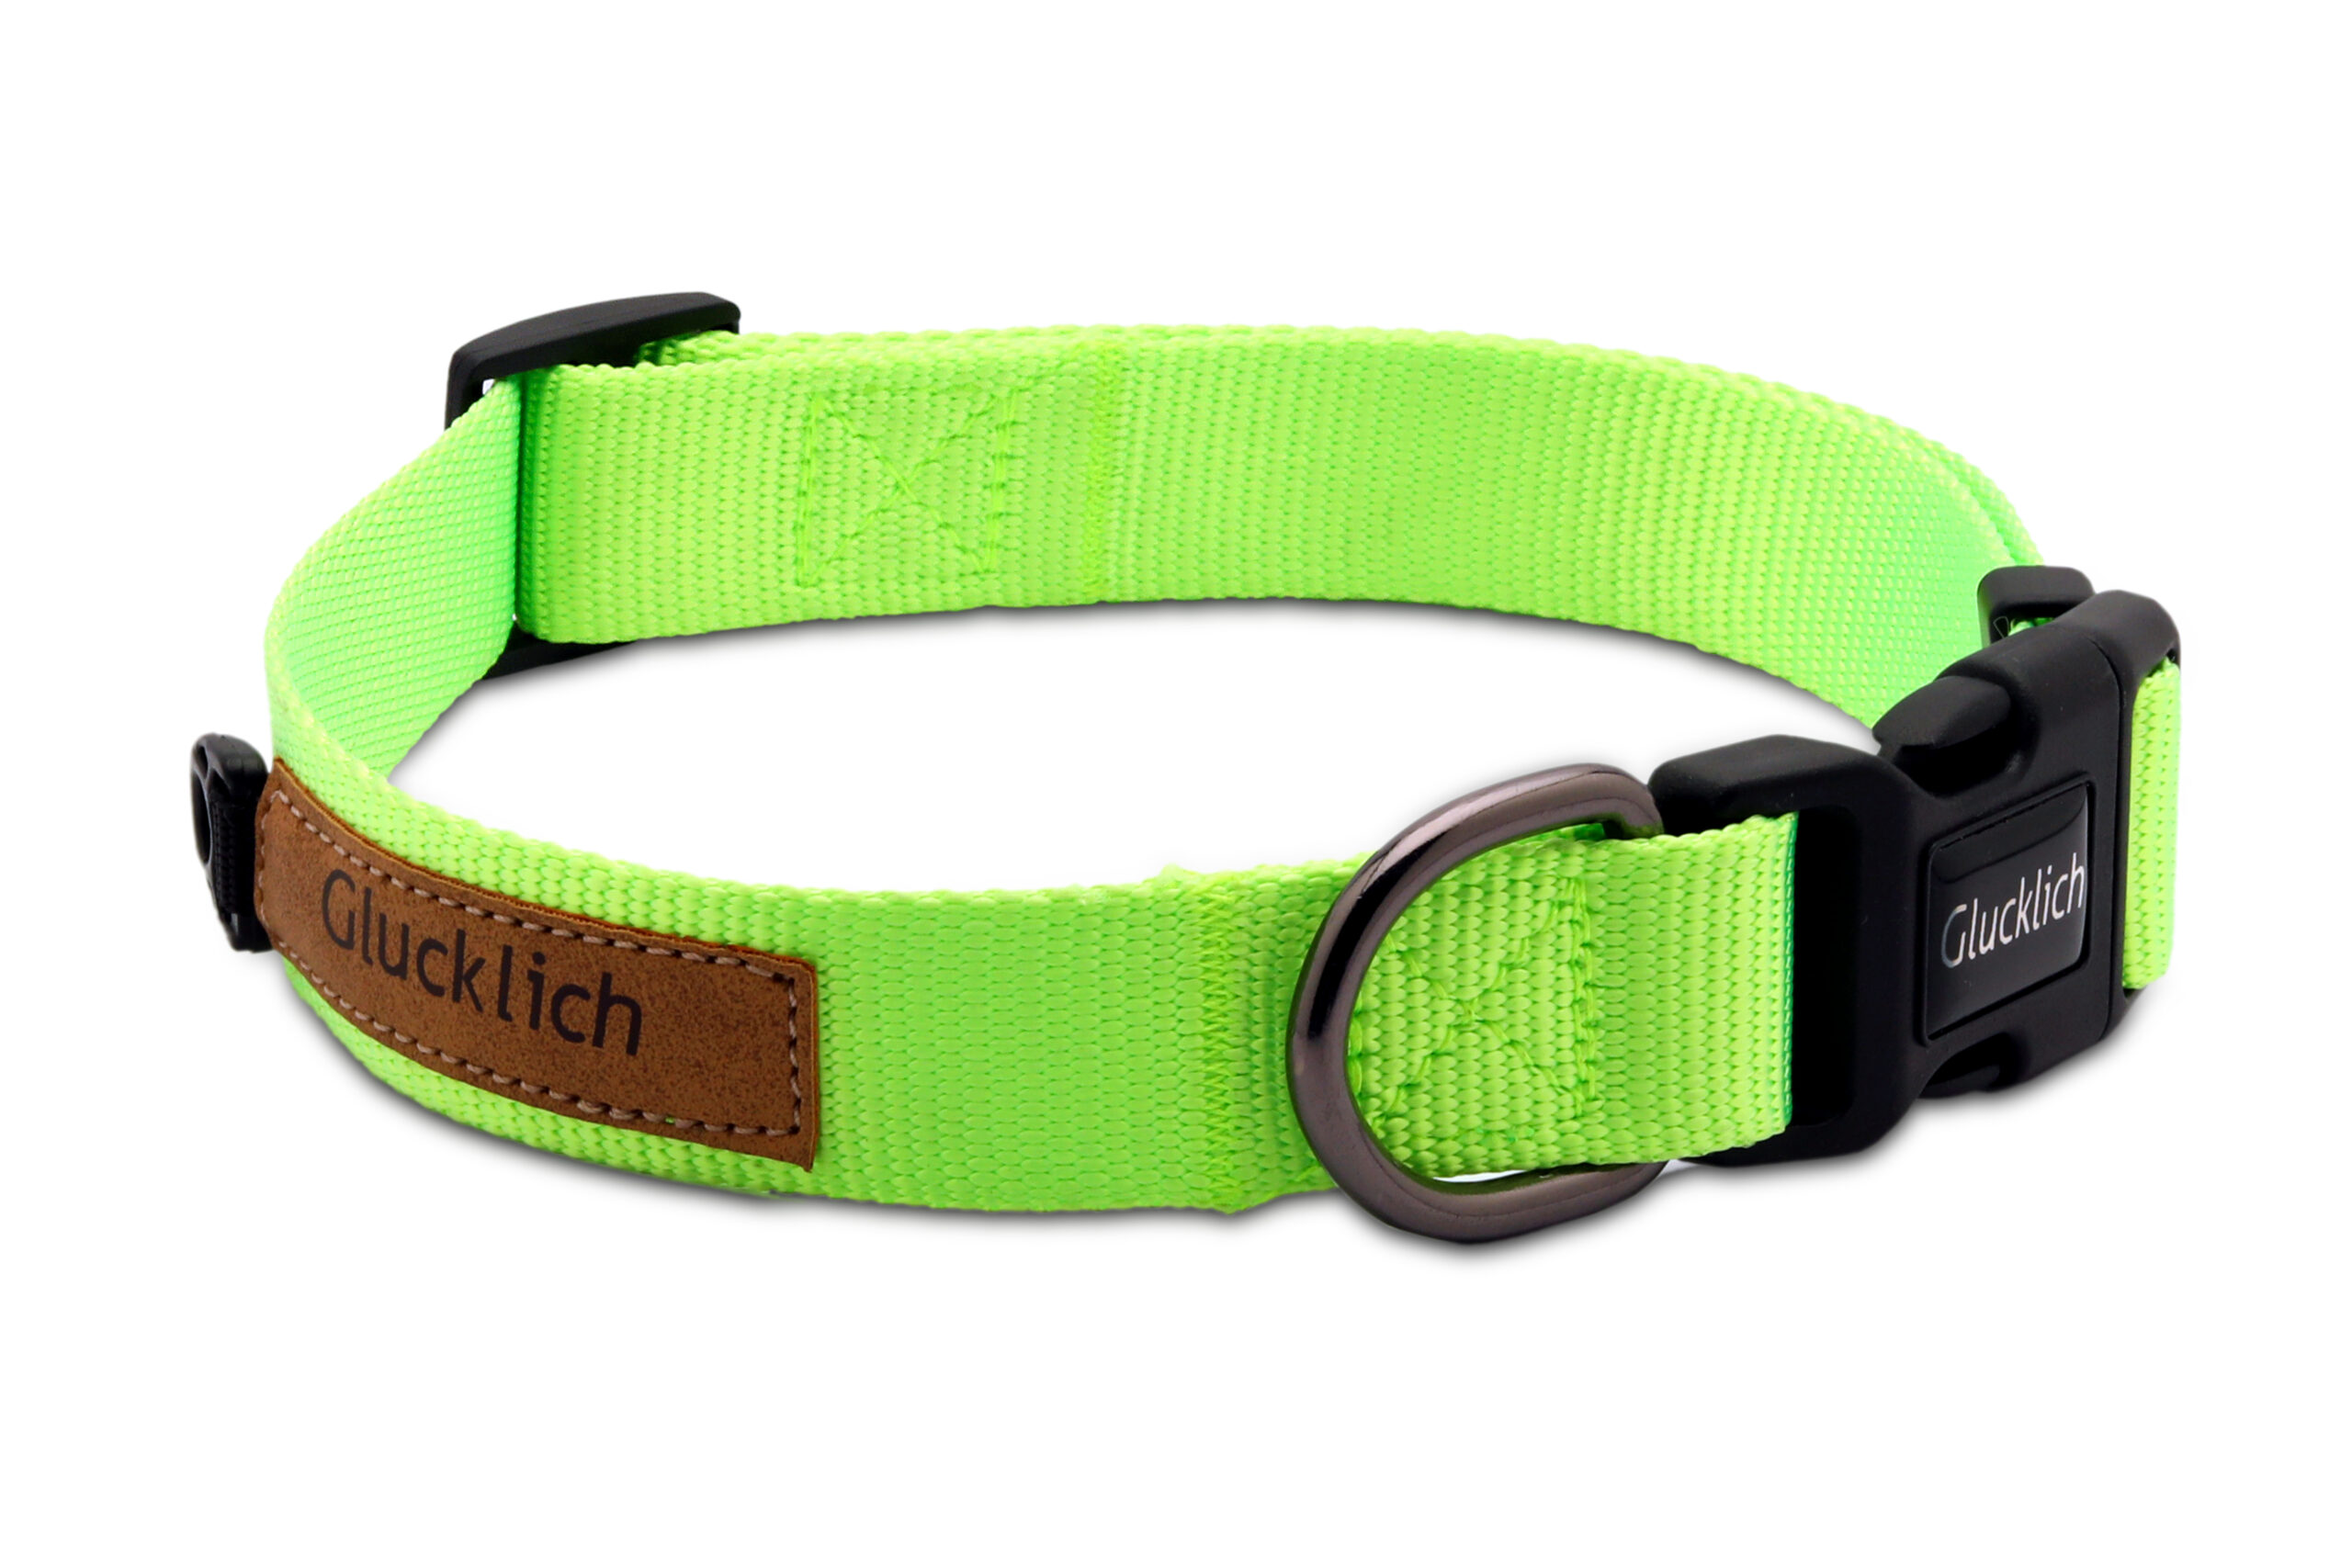 Glucklich Nylon Dog Collar (Light Green XS)